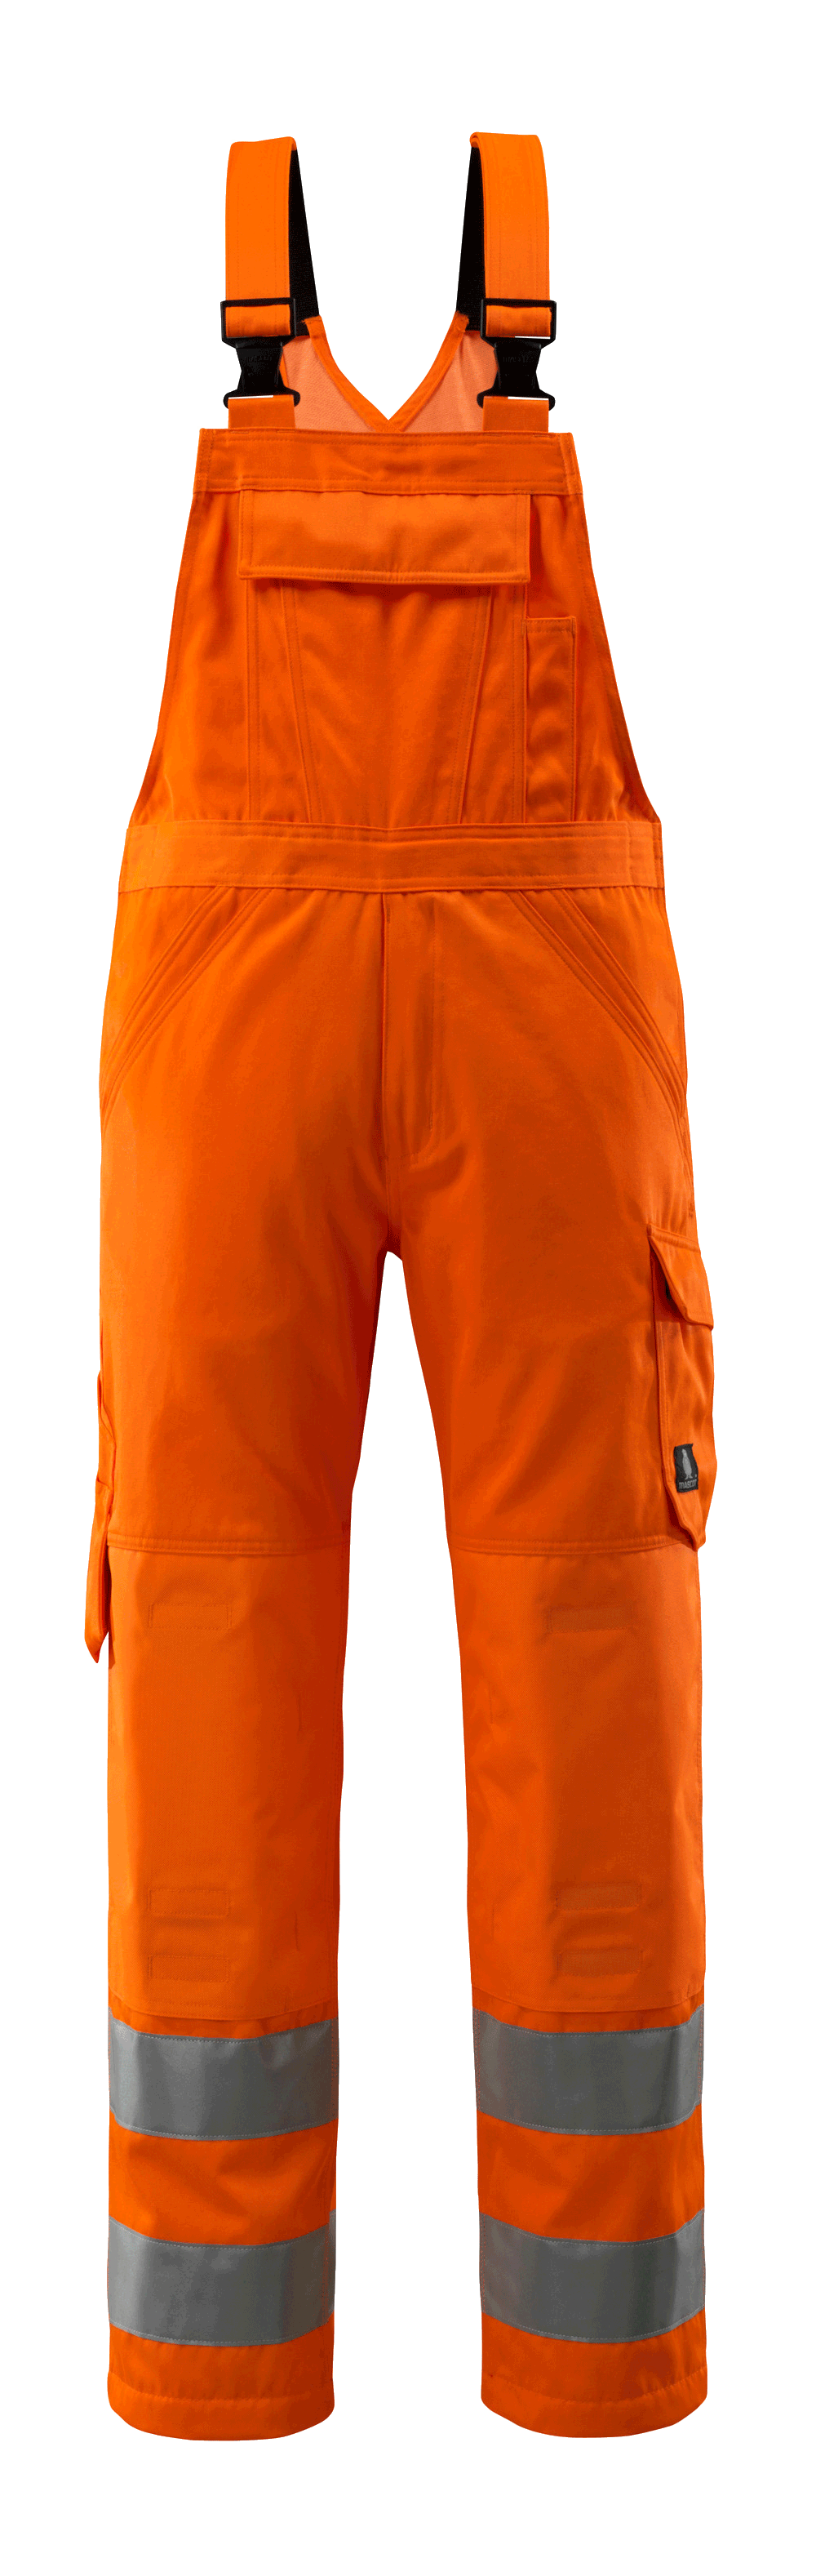 Herren Latzhose Mascot Devonport 16869-860 hi-vis orange 14_1